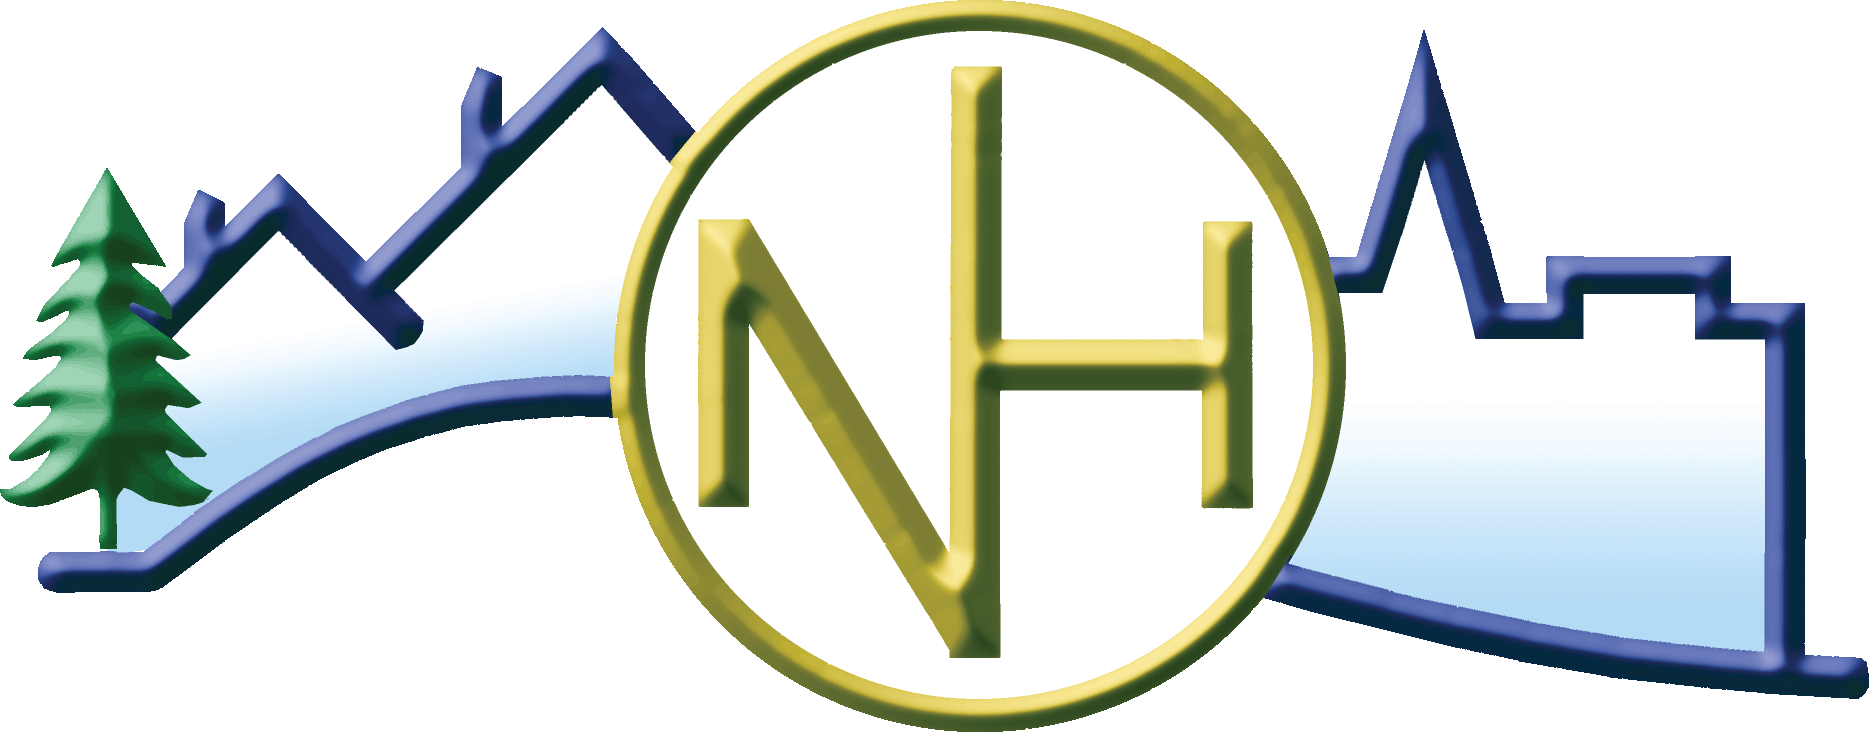 New Hope Logo - Home of New Hope